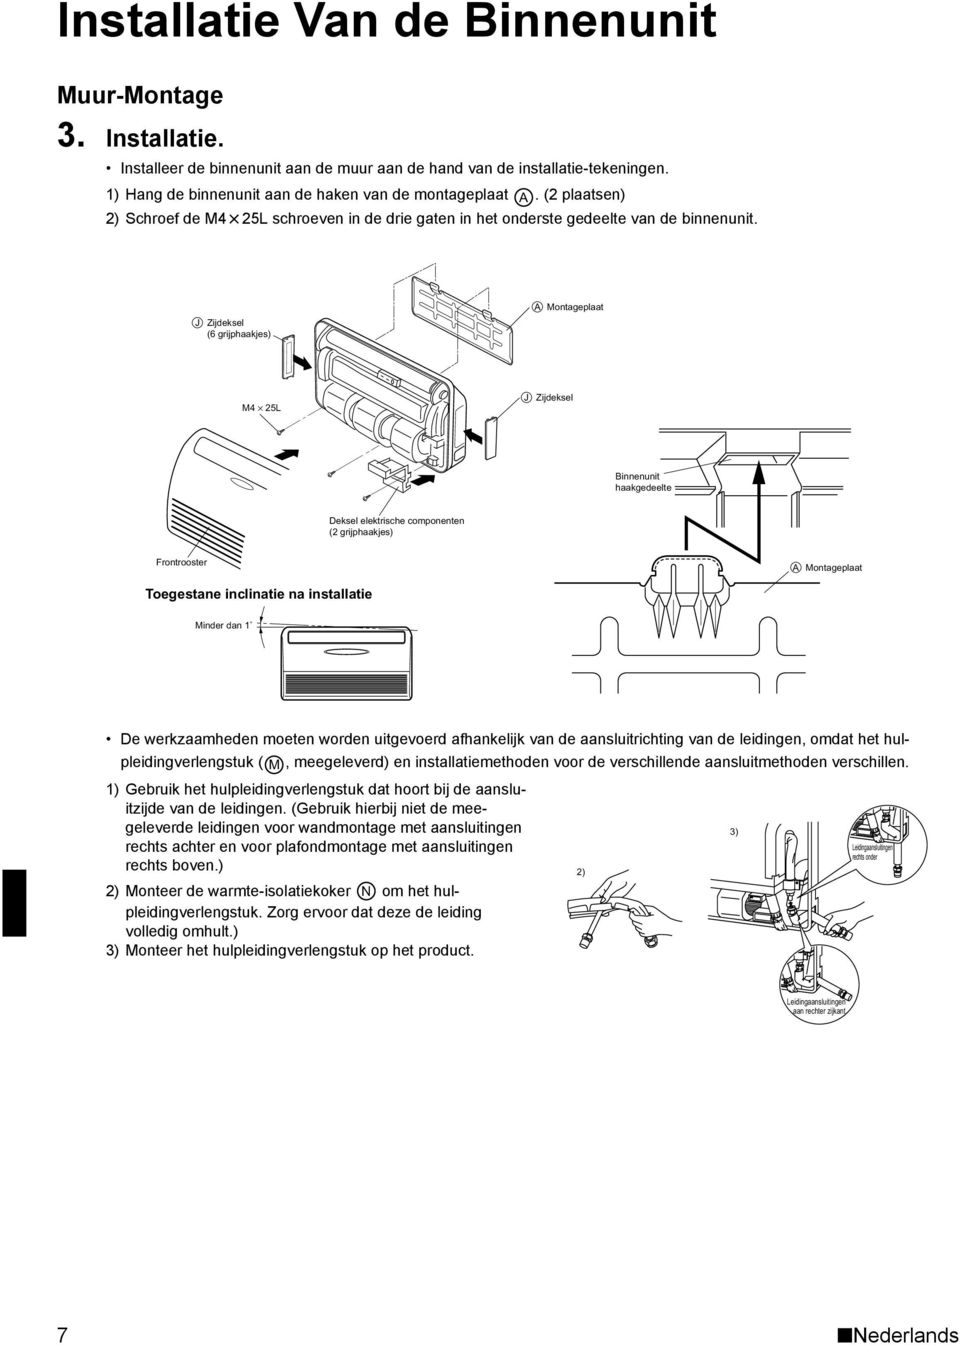 Installation Manual R410a Split Series Pdf Free Download